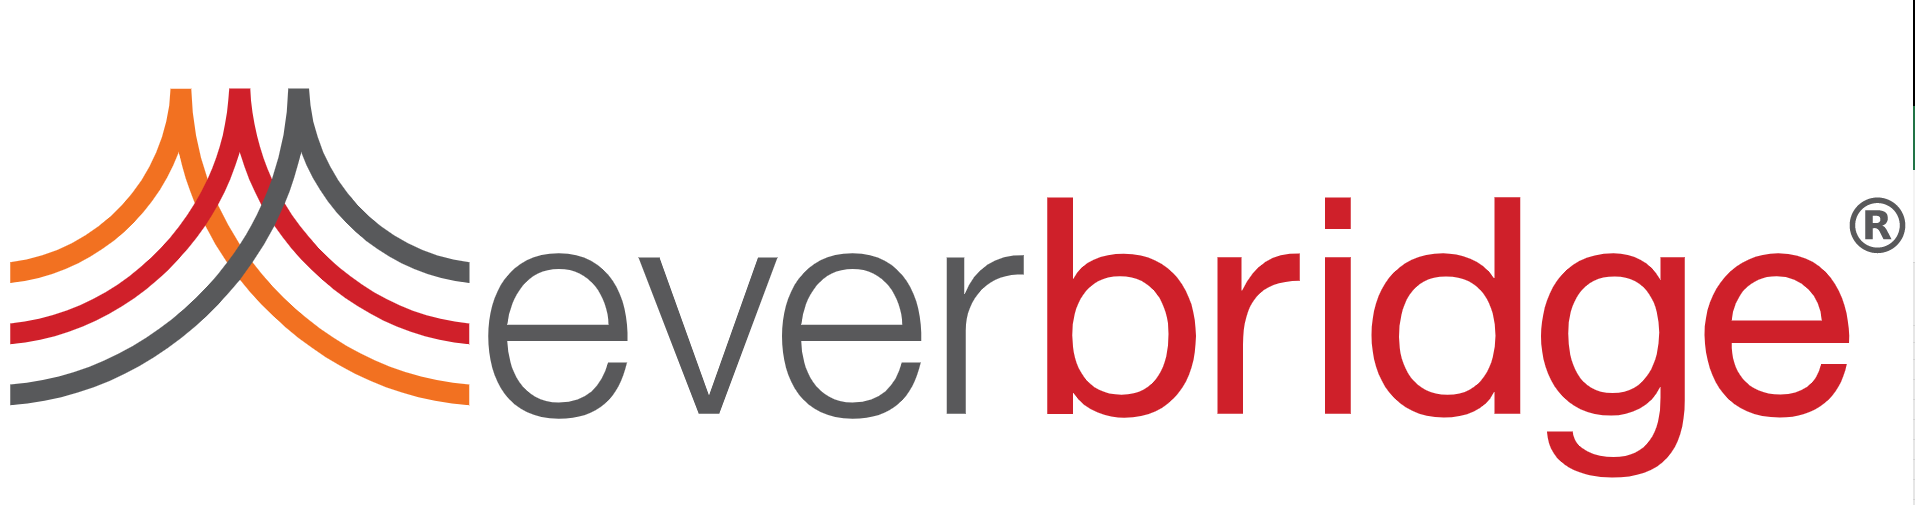 Everbridge-logo.